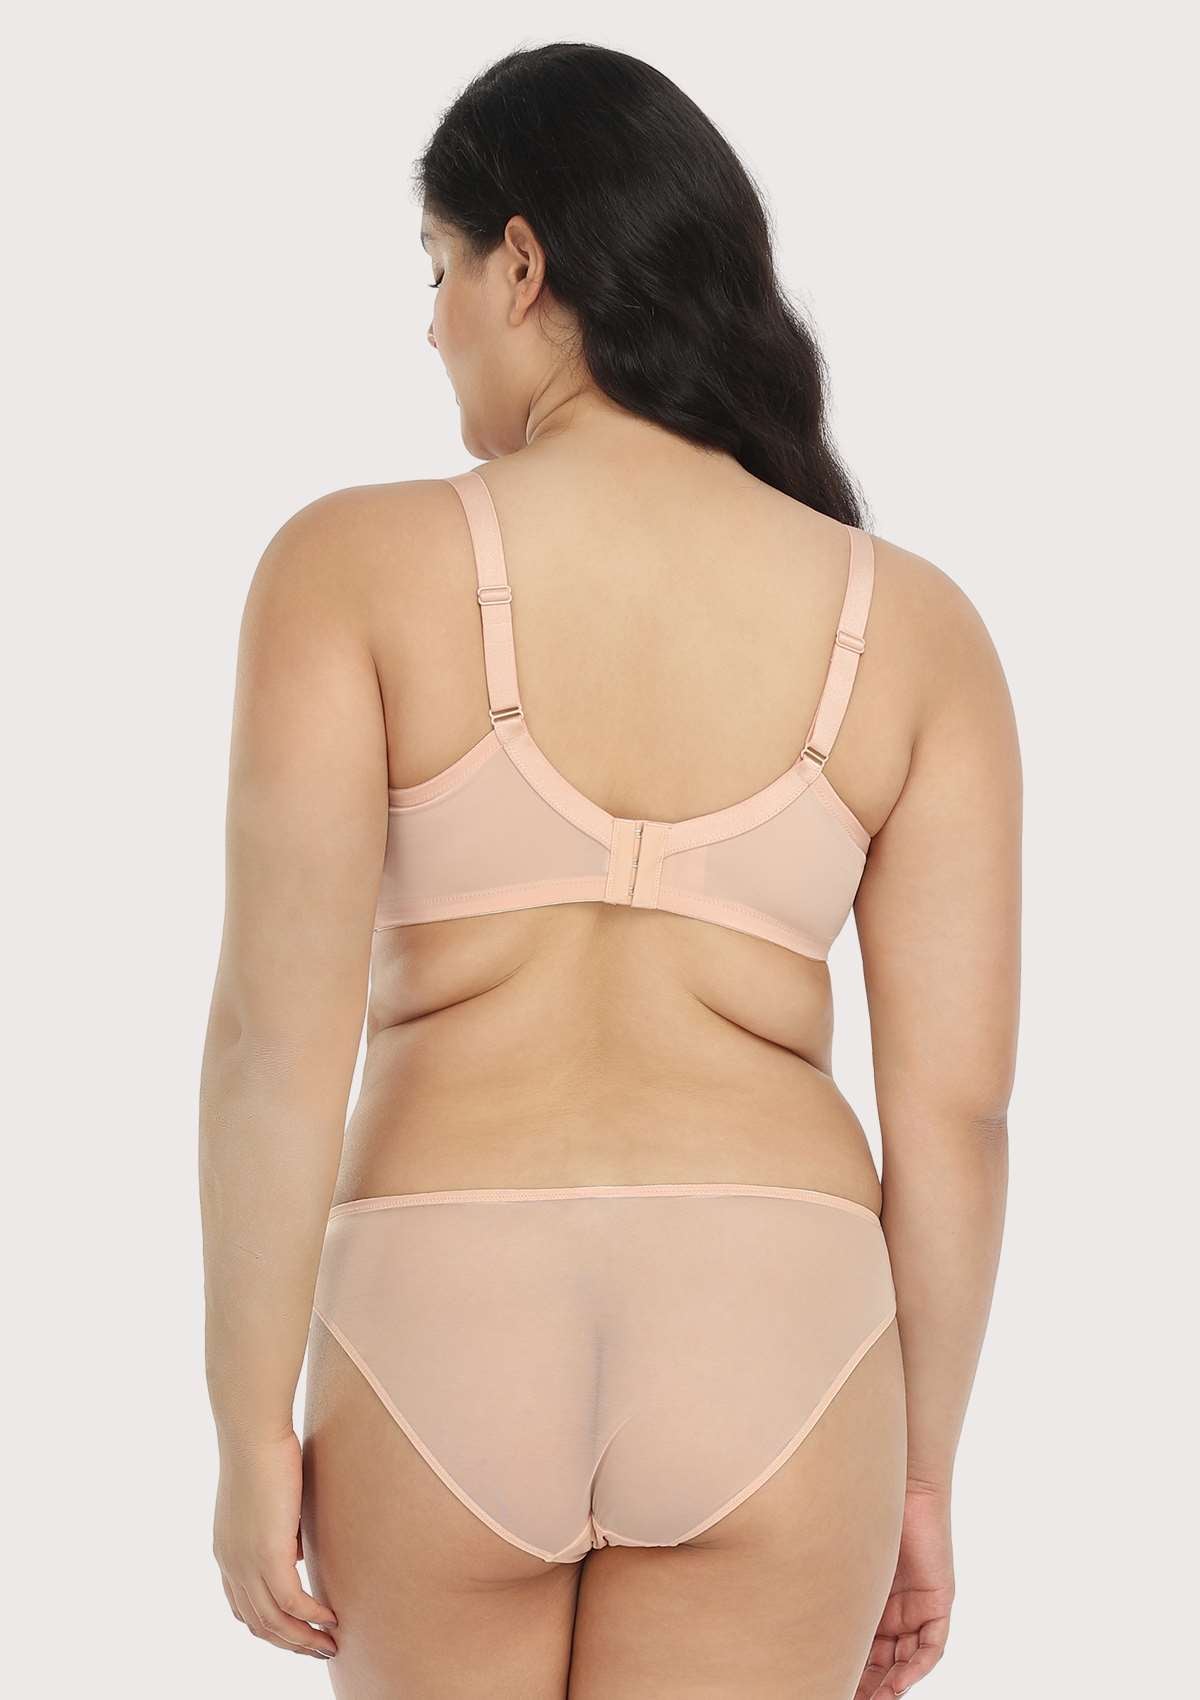 HSIA Sunflower Matching Bra And Panties Set: Comfortable Plus Size Bra - Pink / 40 / DDD/F